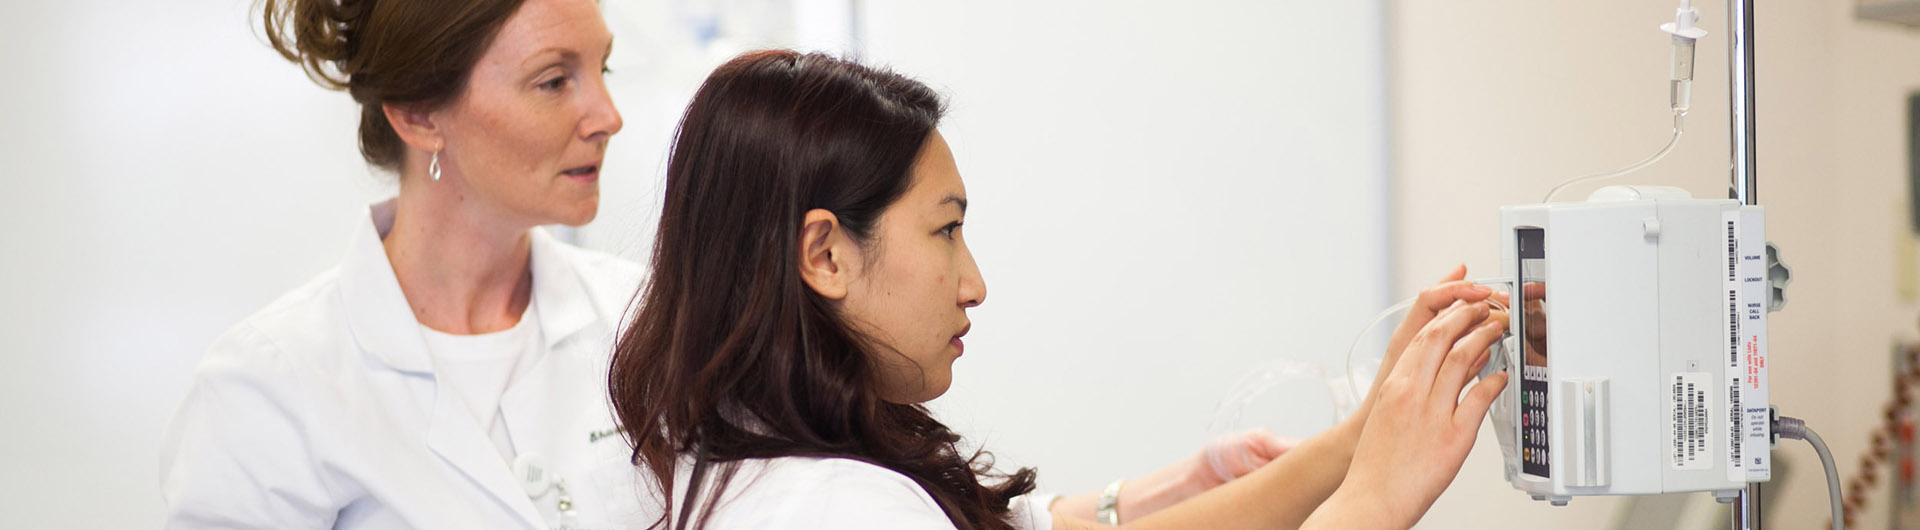 student nurse adjusts diagnostic tool